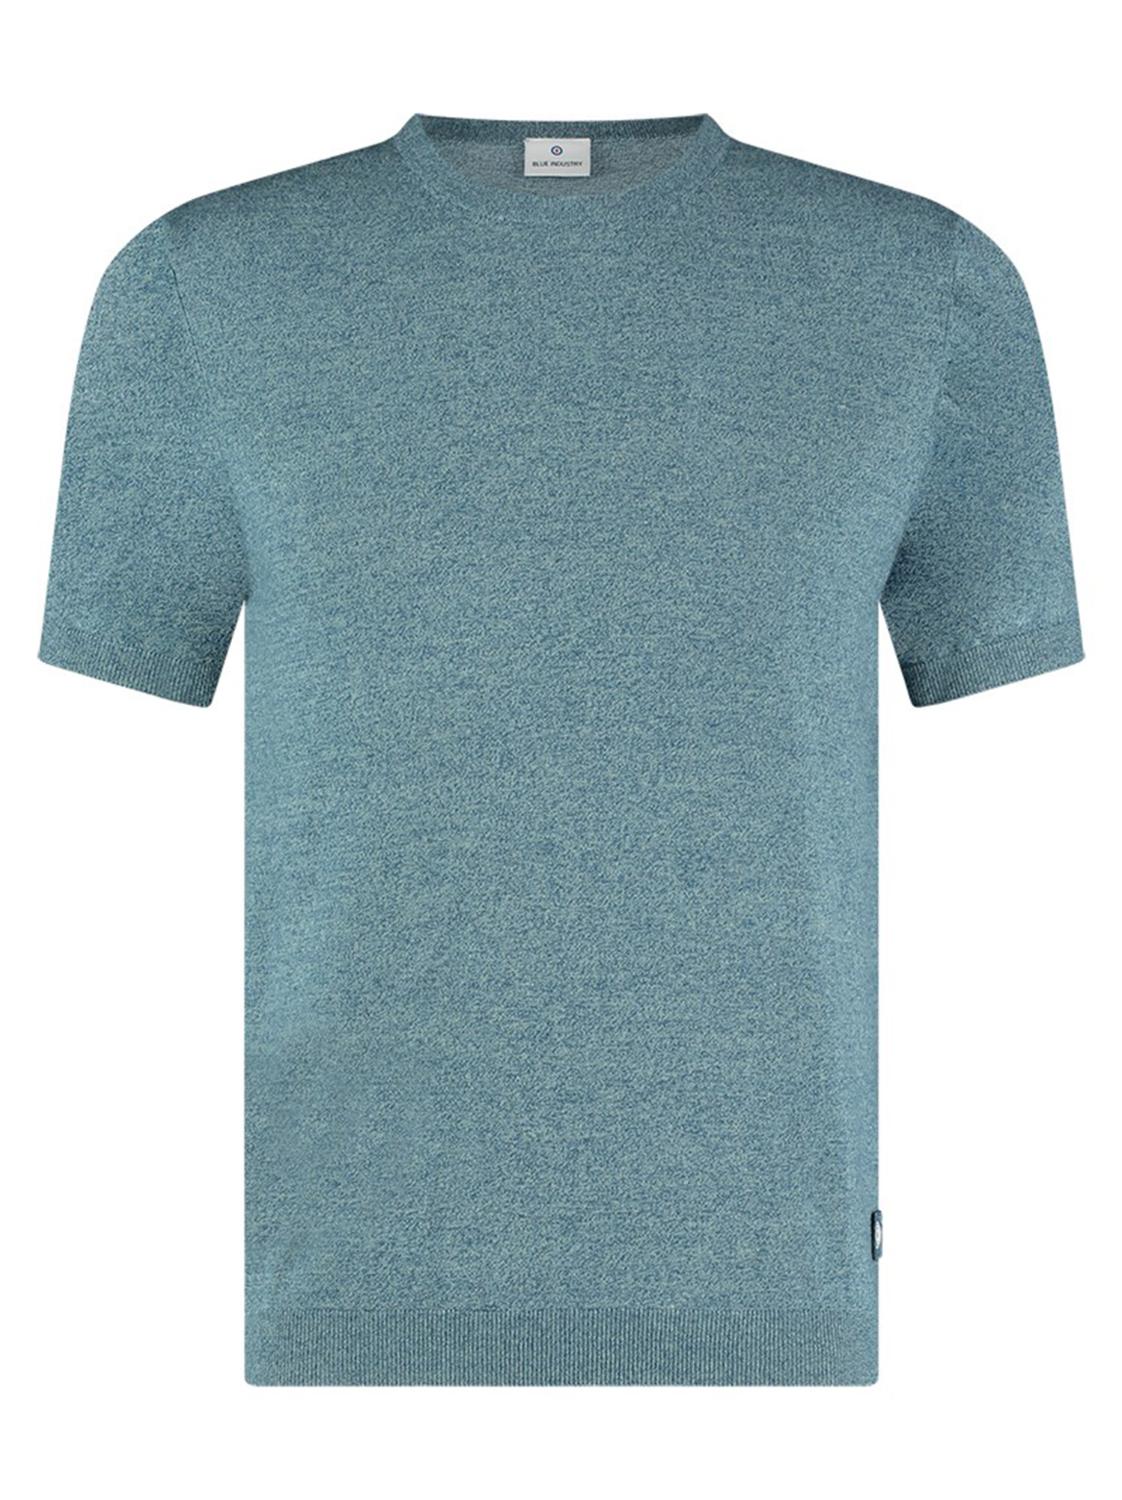 Afbeelding van Blue Industry Blue indsutry t-shirt perfect